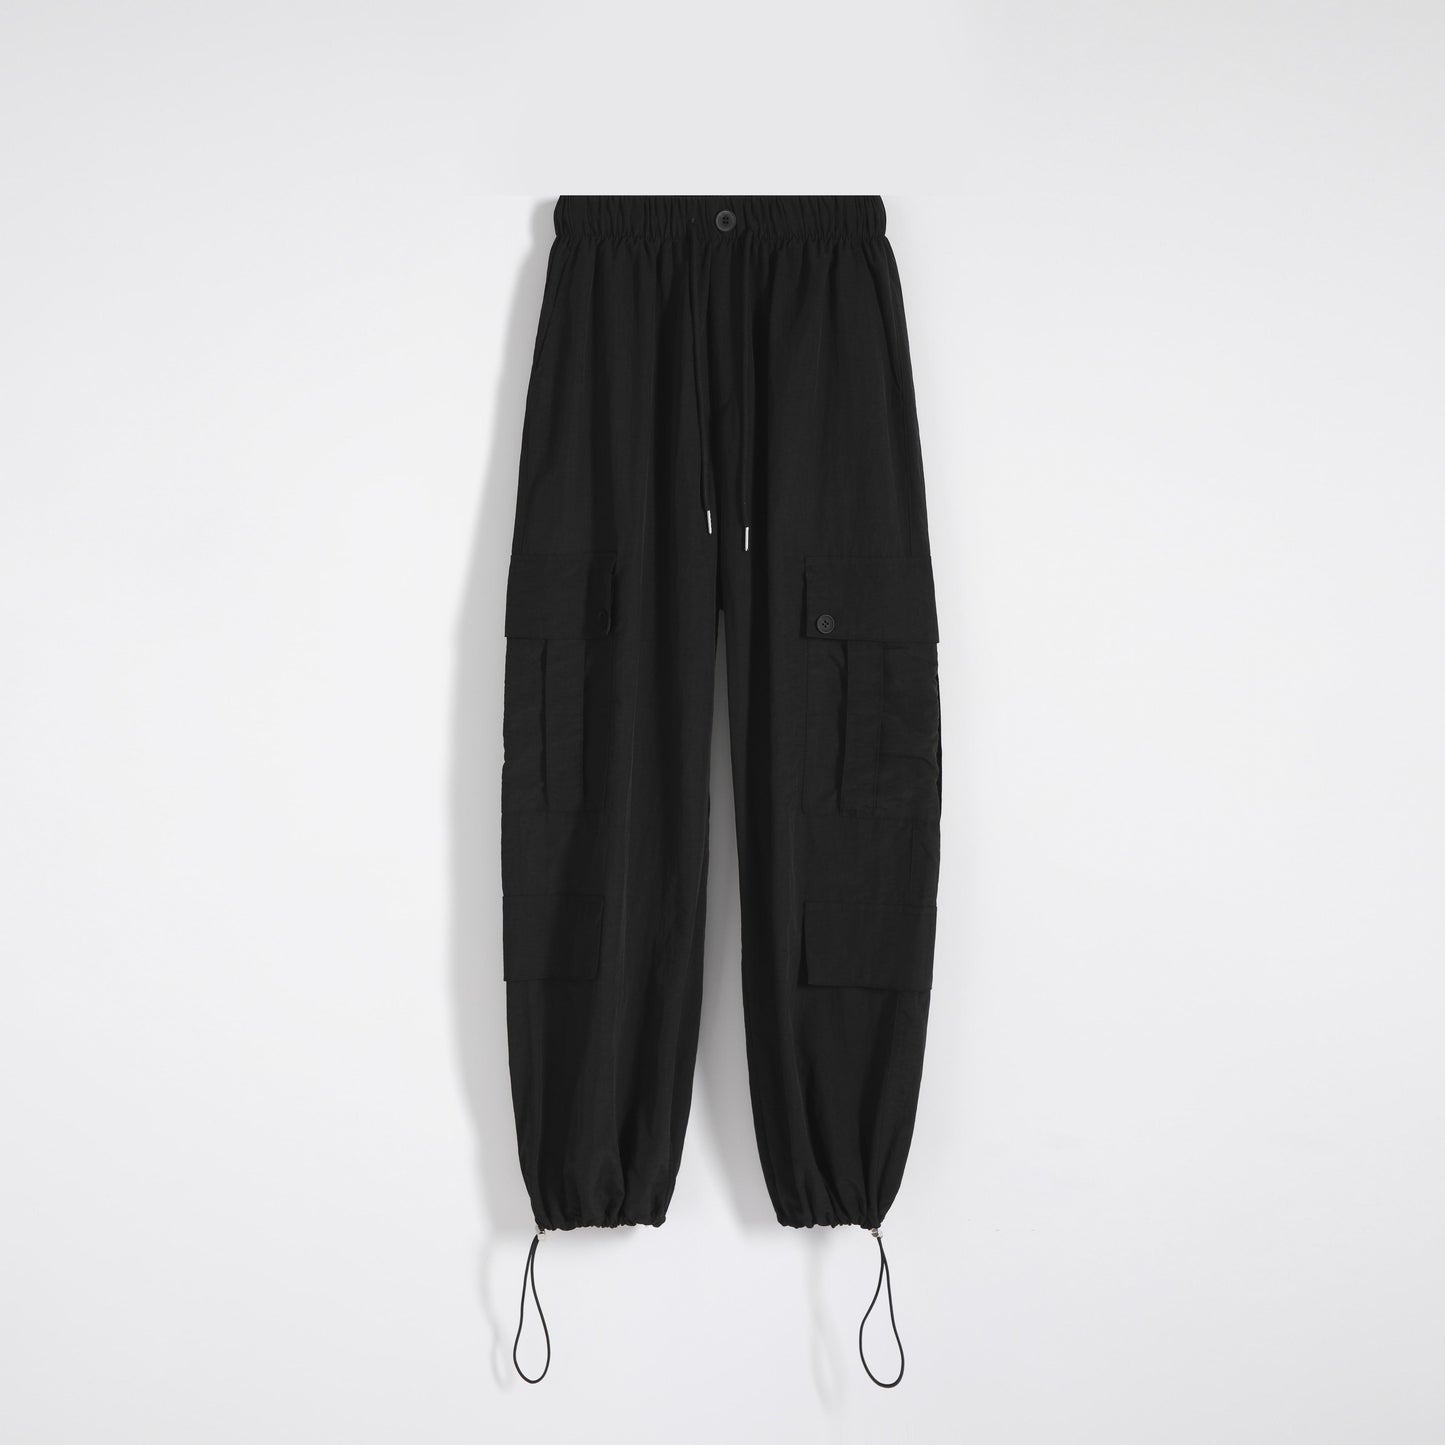 Pantalones holgados casuales clásicos de múltiples bolsillos de moda